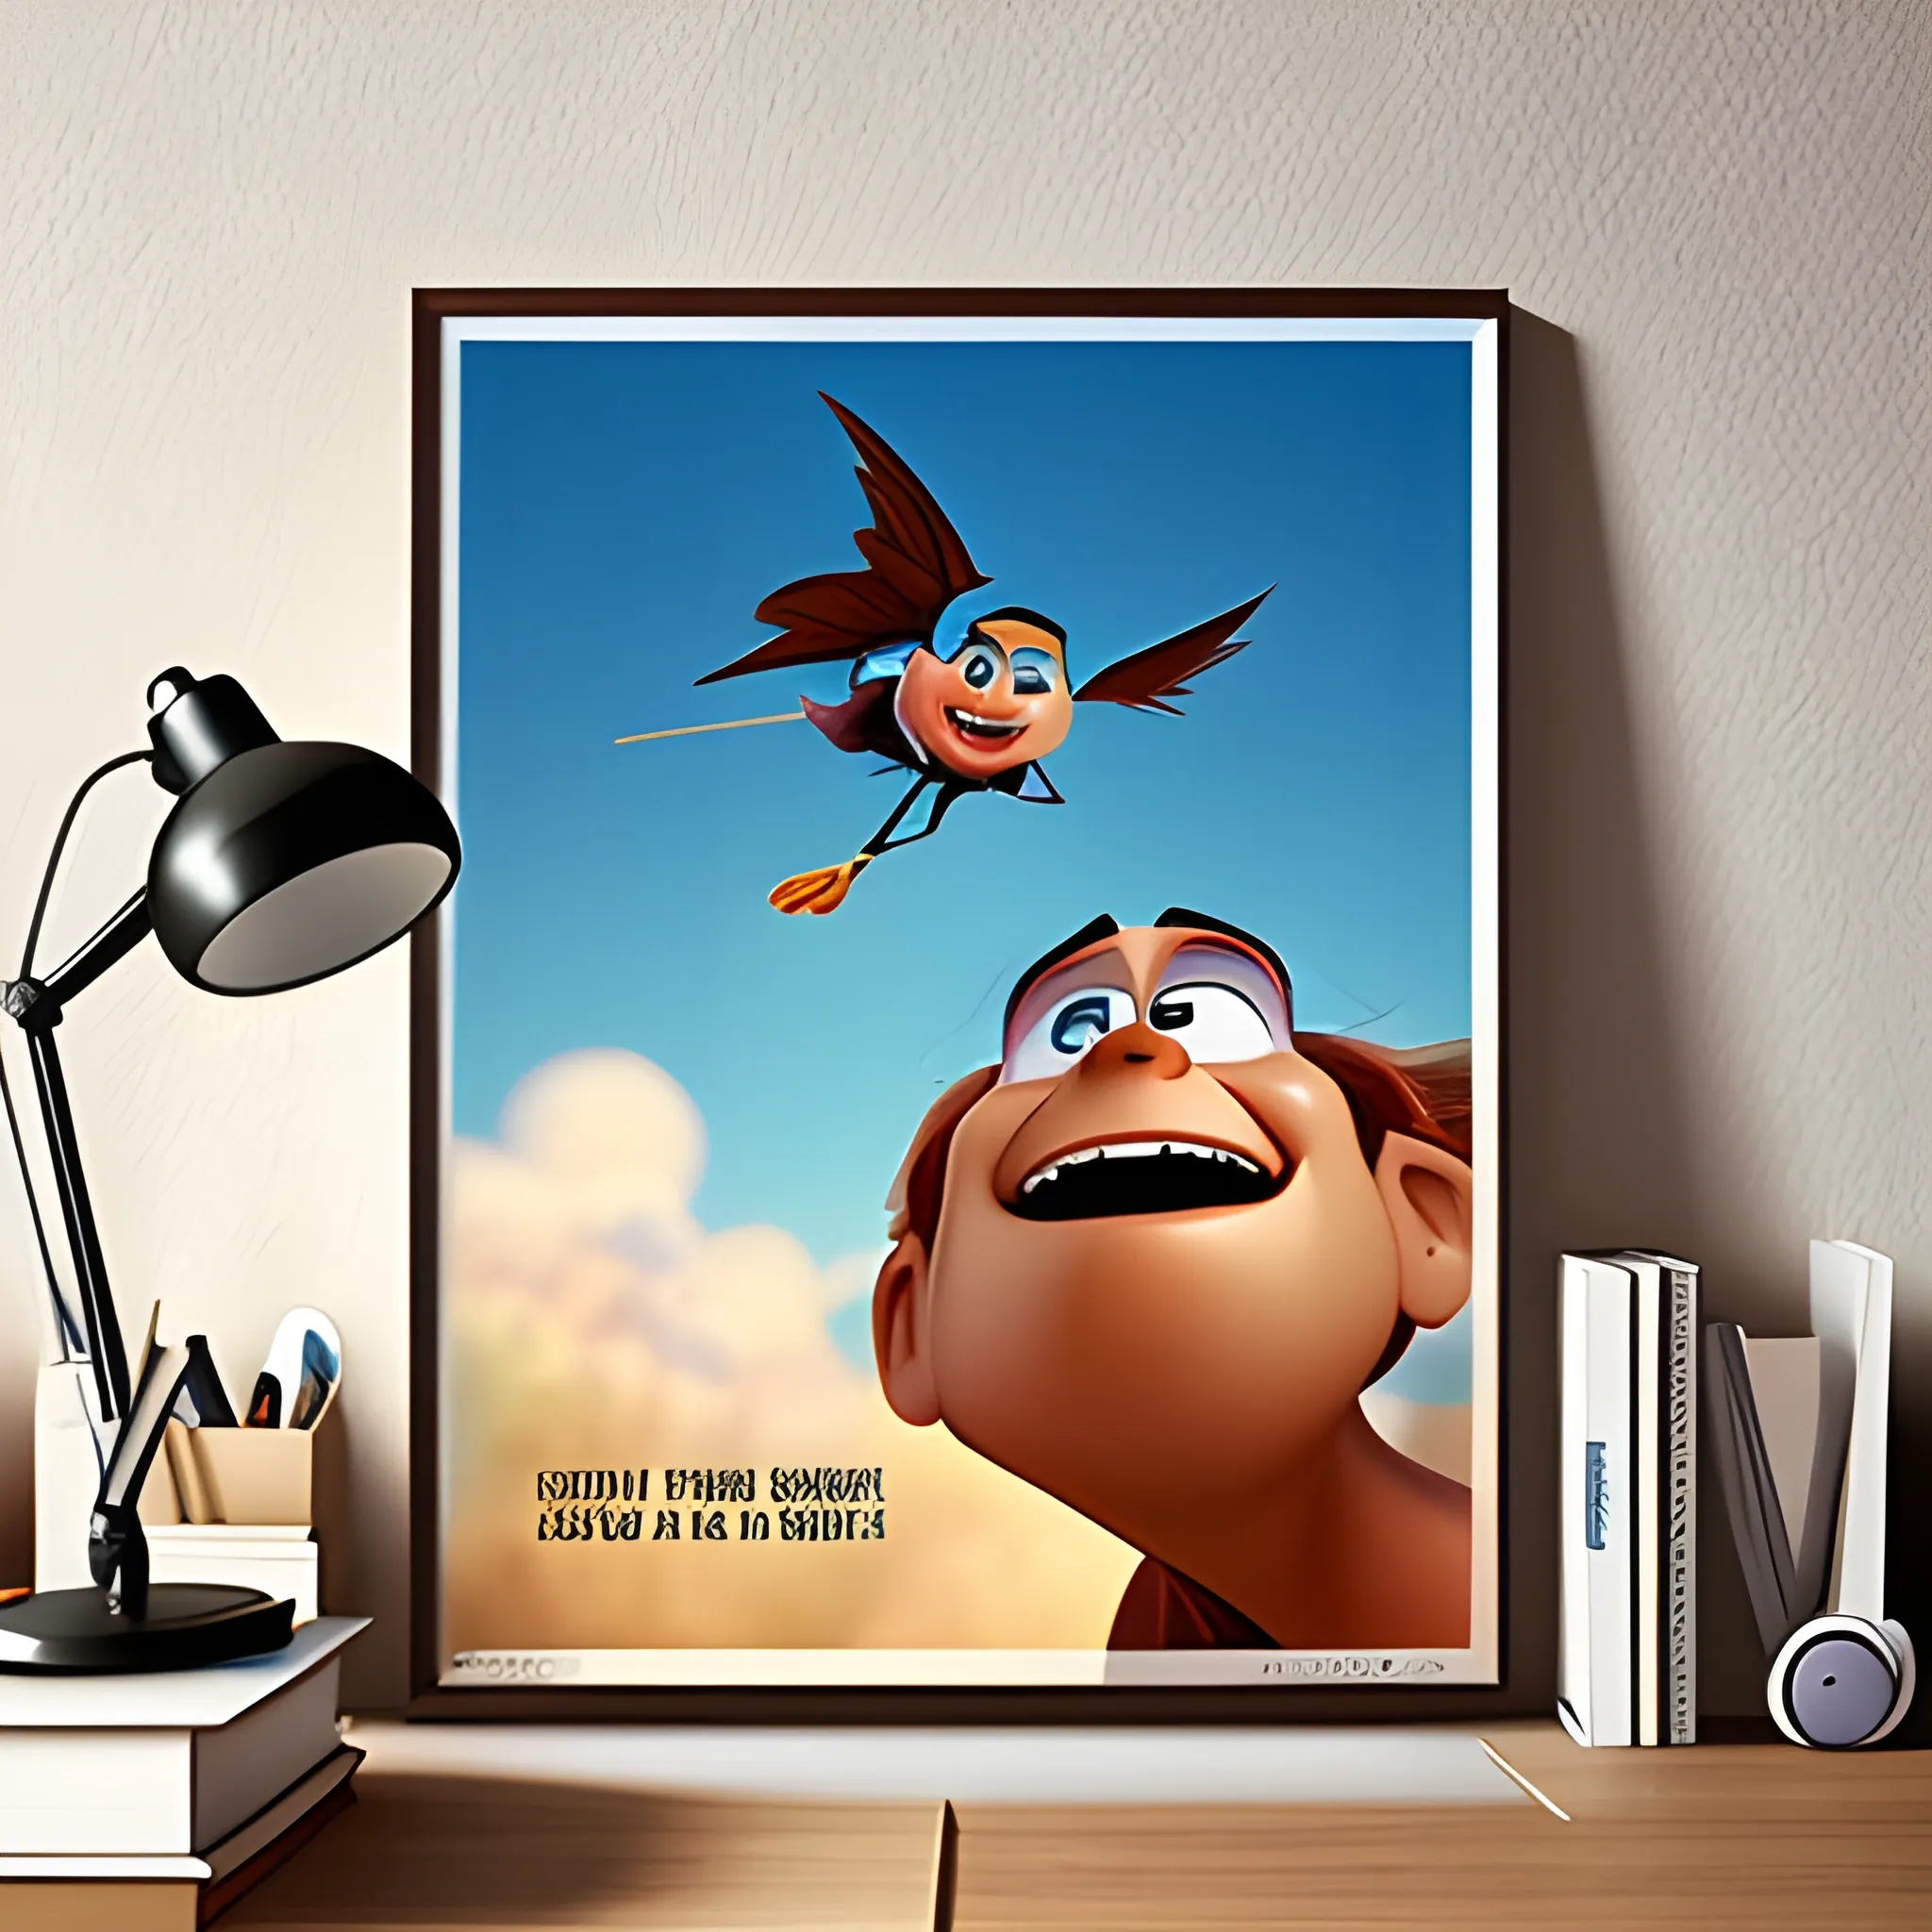 Disney Pixar movie poster piercing